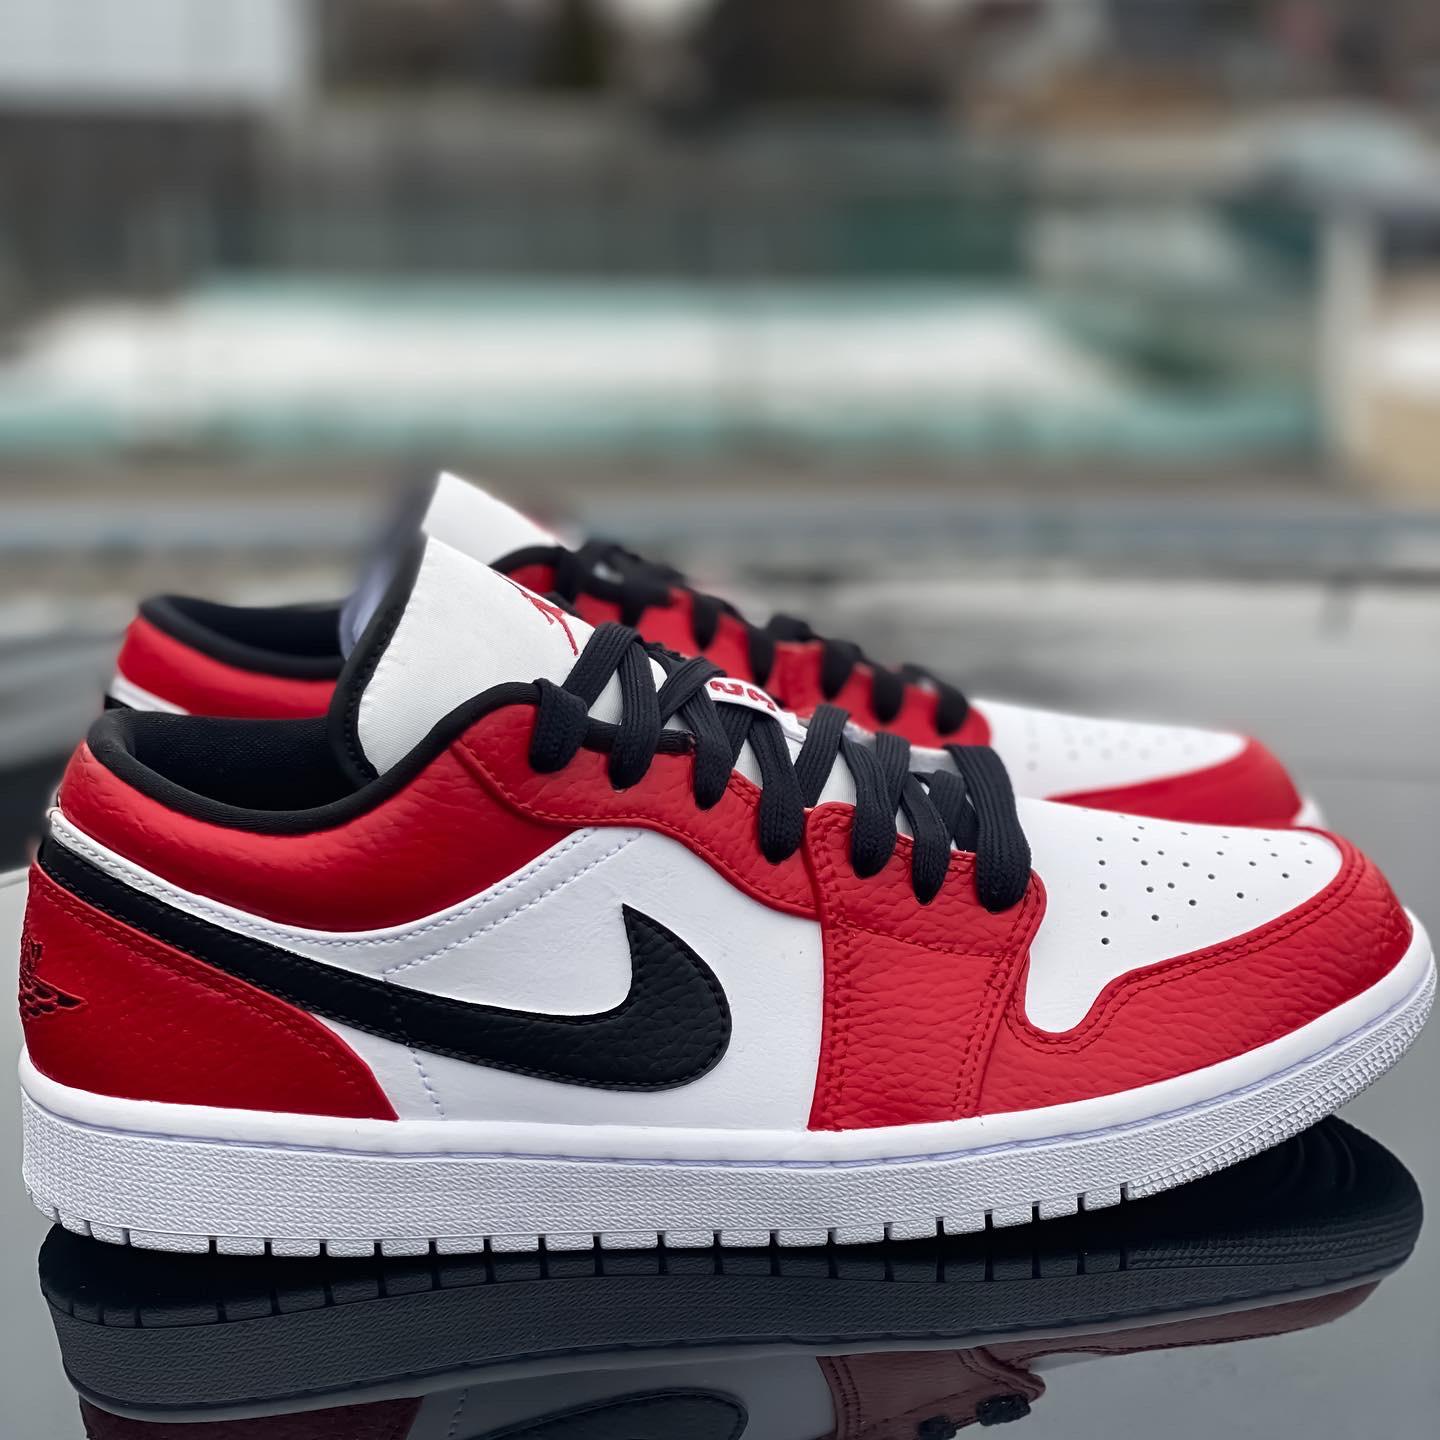 Katty Customs - DRIP or SKIP? 🤔 Custom Red/Black/White Jordan 10s